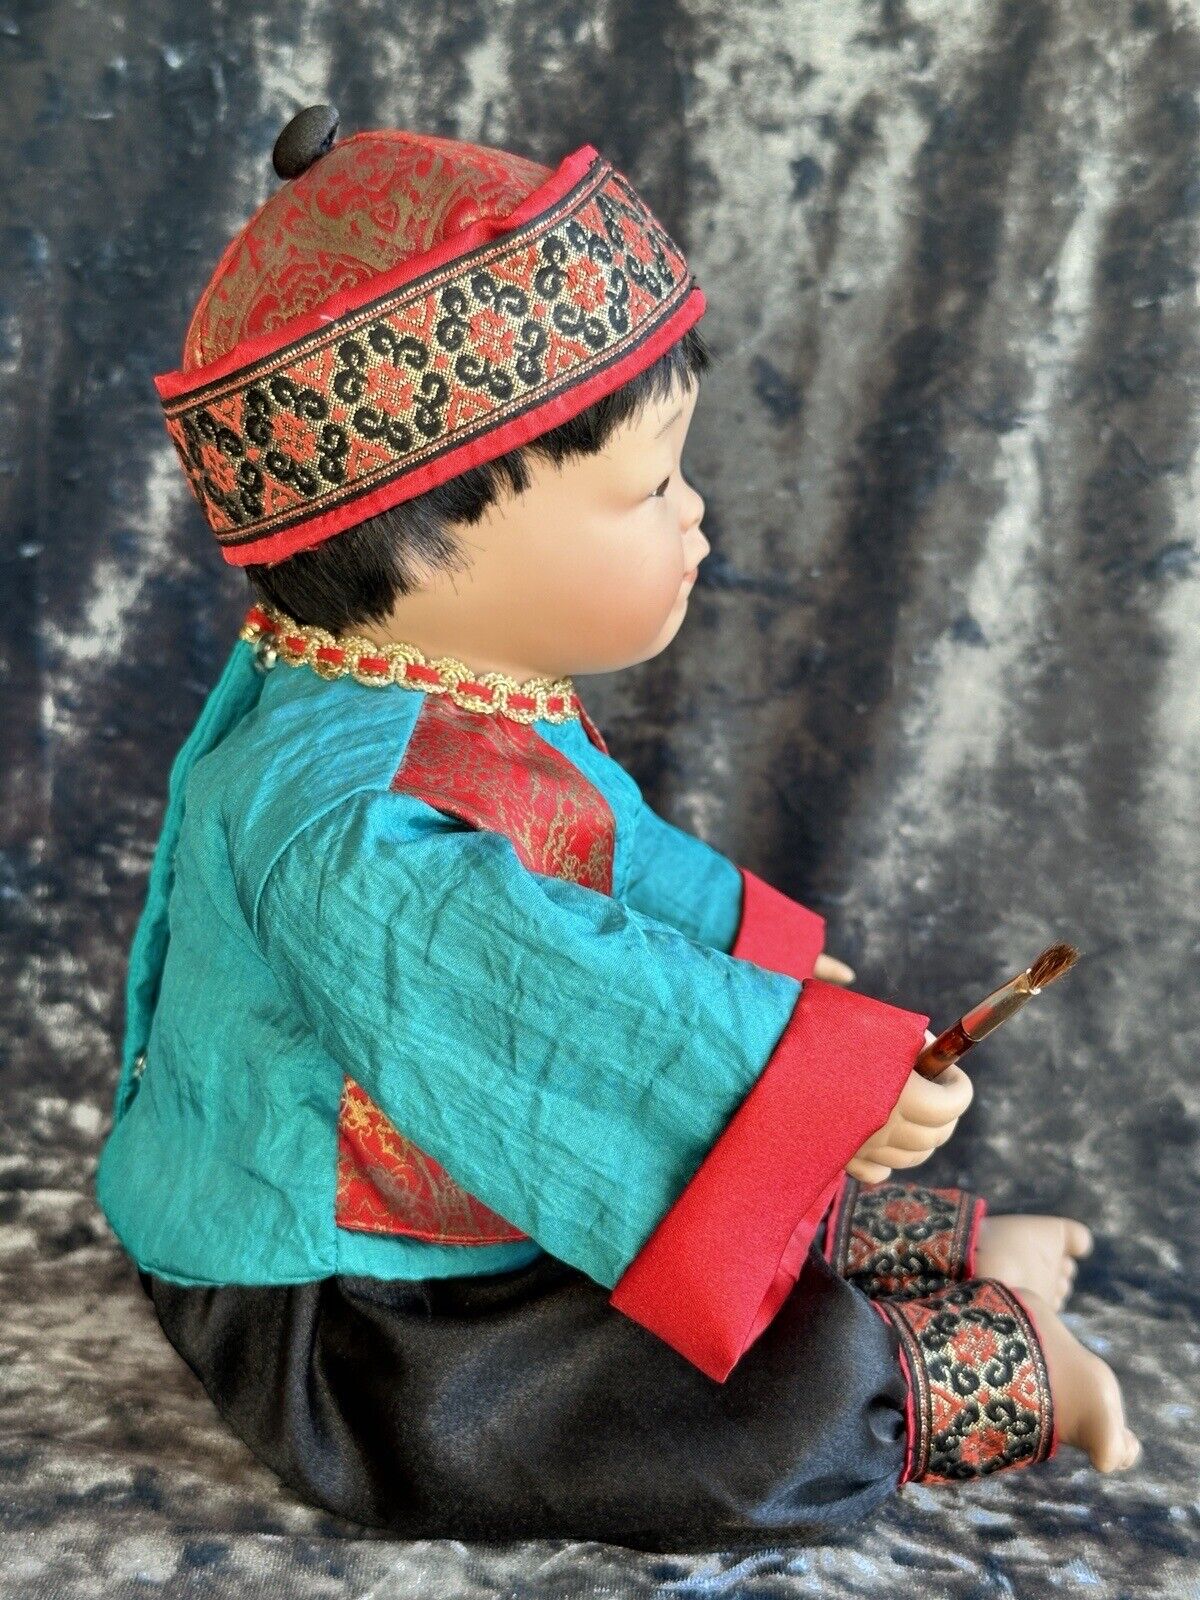 Collectible Porcelain Oriental Dolls by Yolanda Bello for Ashton Drake